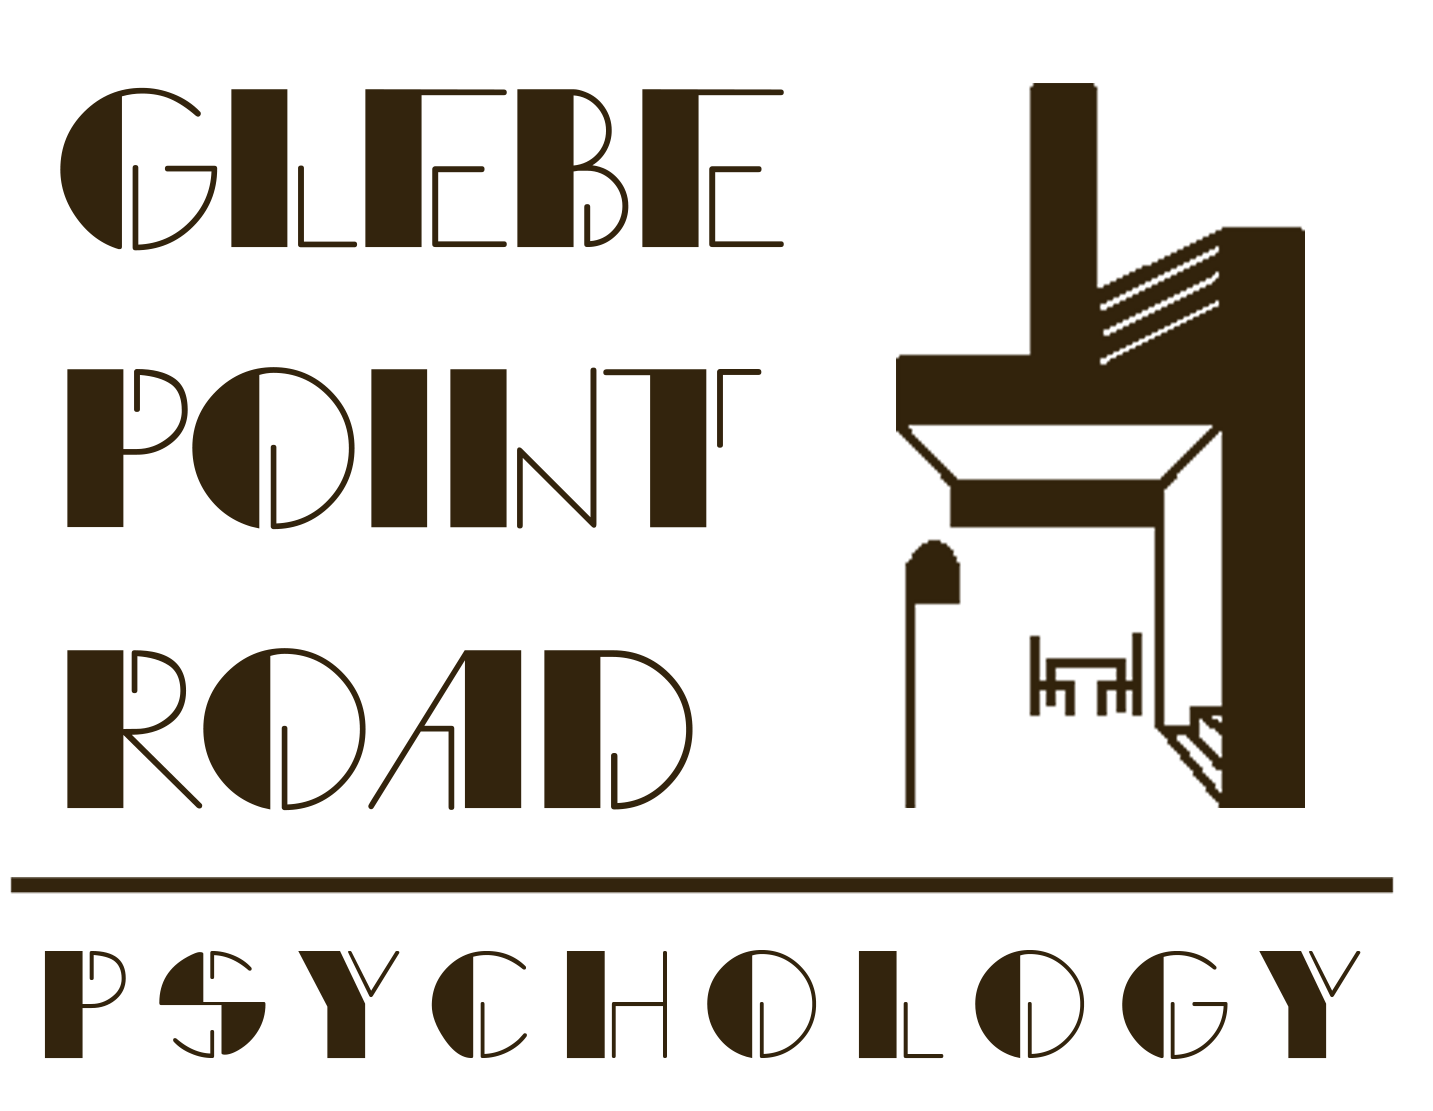 Glebe Point Road Psychology